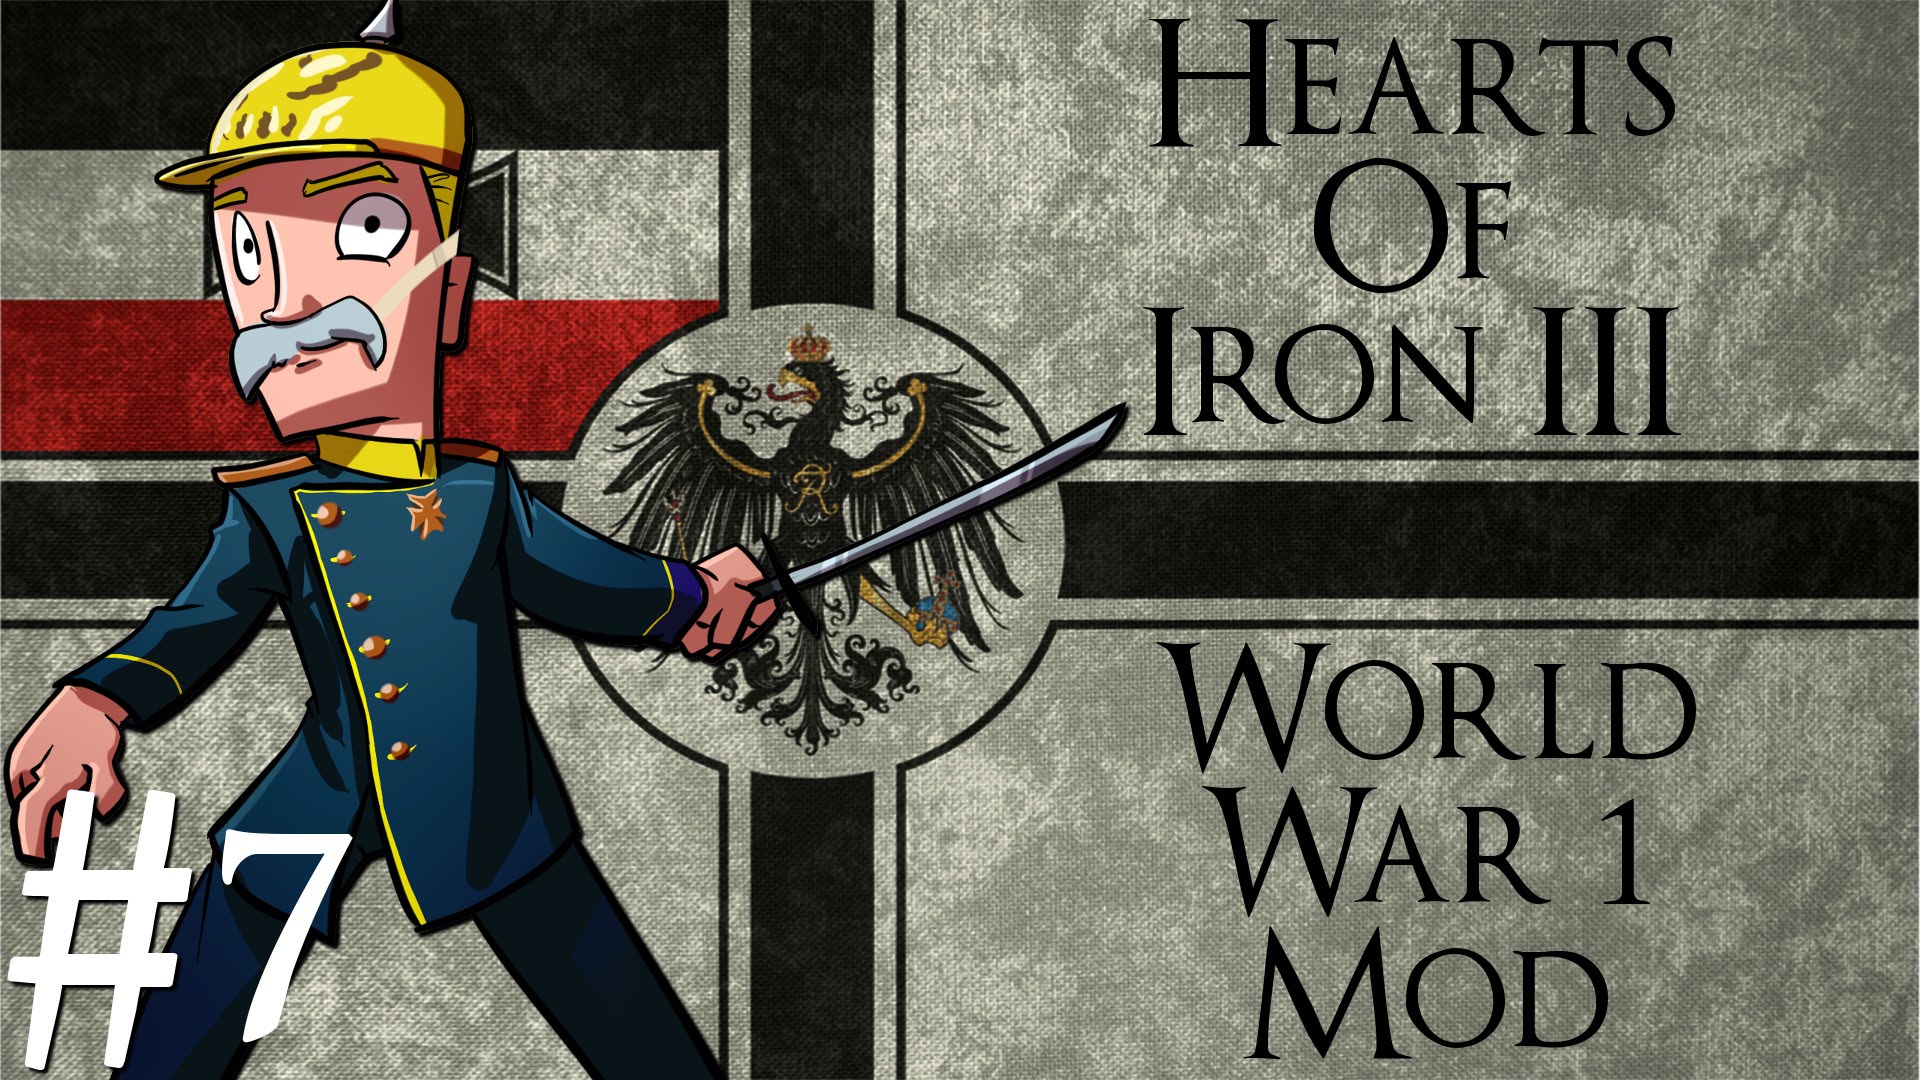 Hearts of Iron 3 | World War 1 mod | German Empire | Part 7 | Destruction of the Royal Navy